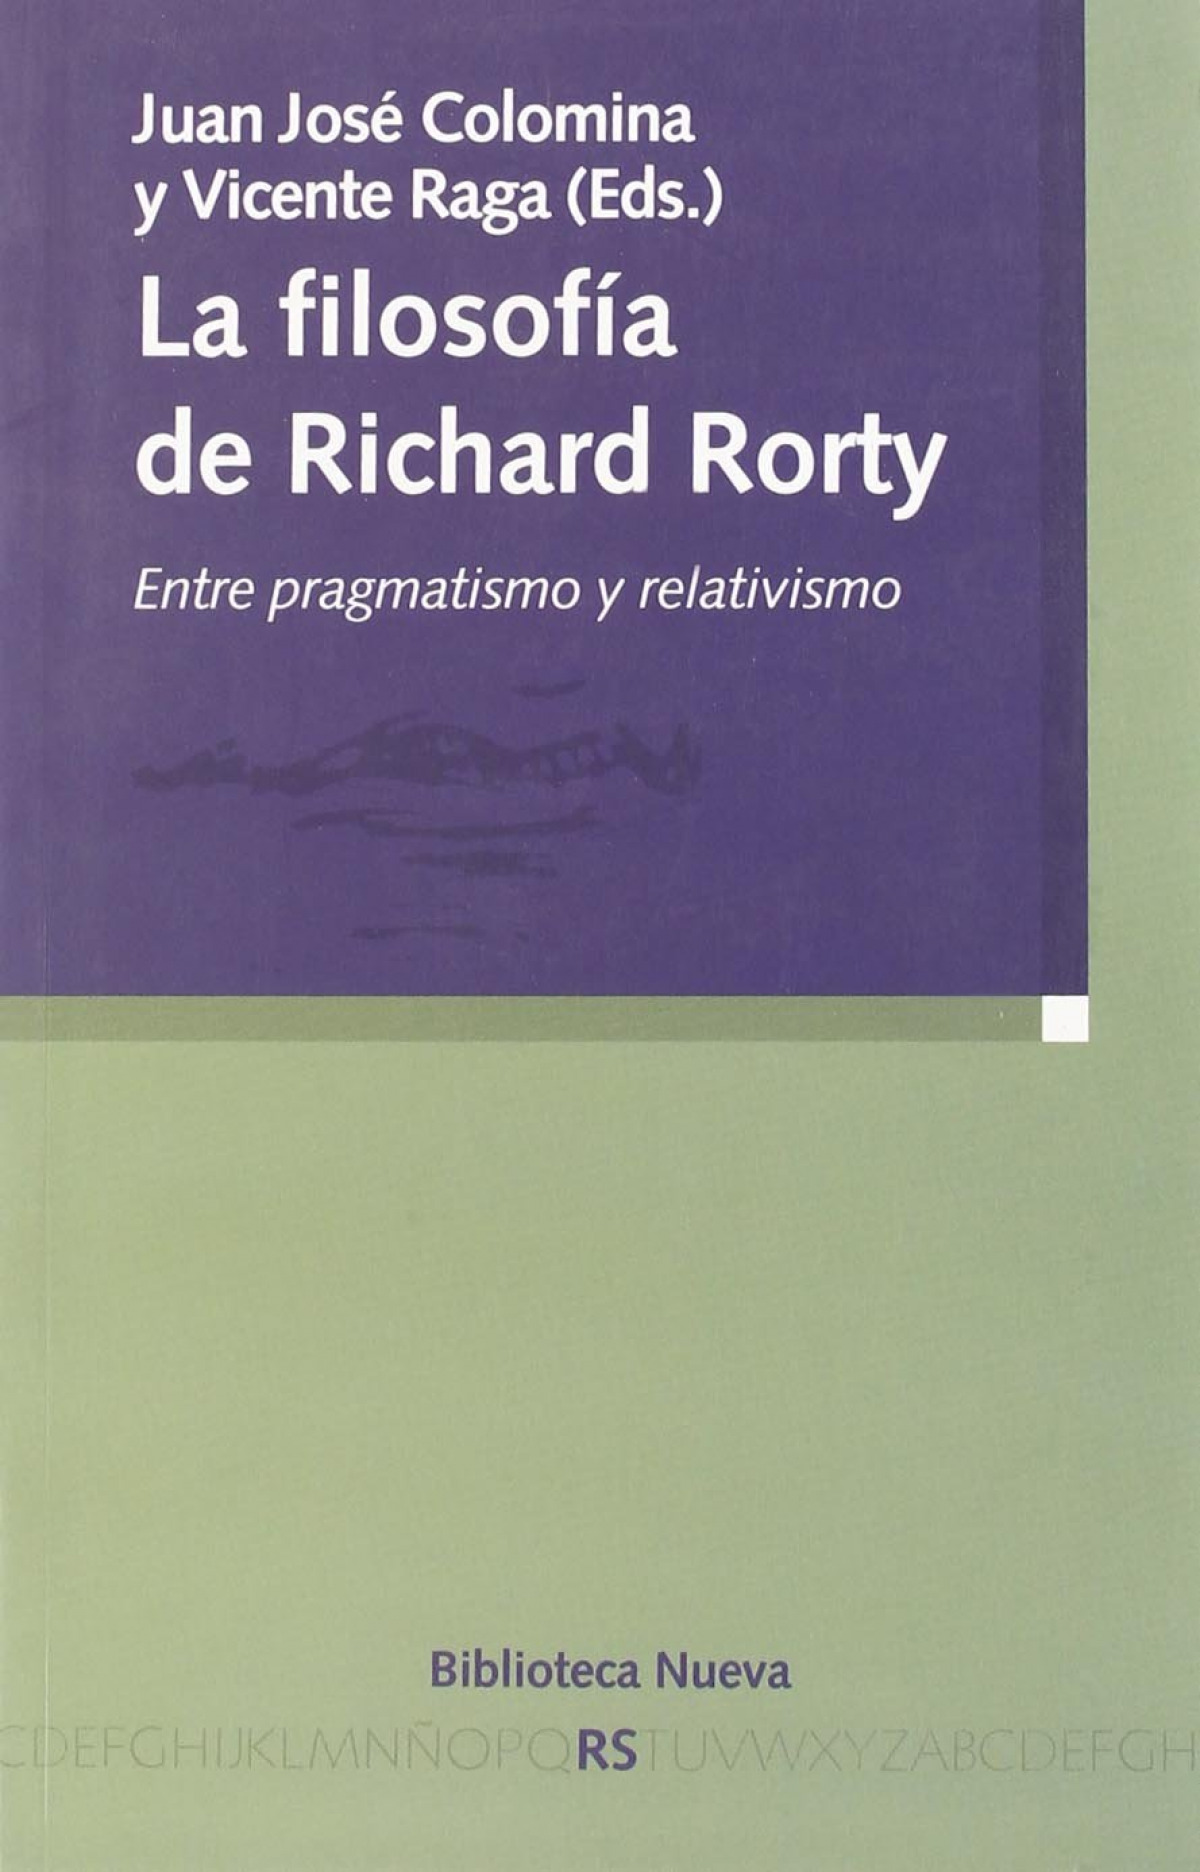 Filosofia de richard rorty,la - Colomina, J,J,, Raga, V, (eds,)